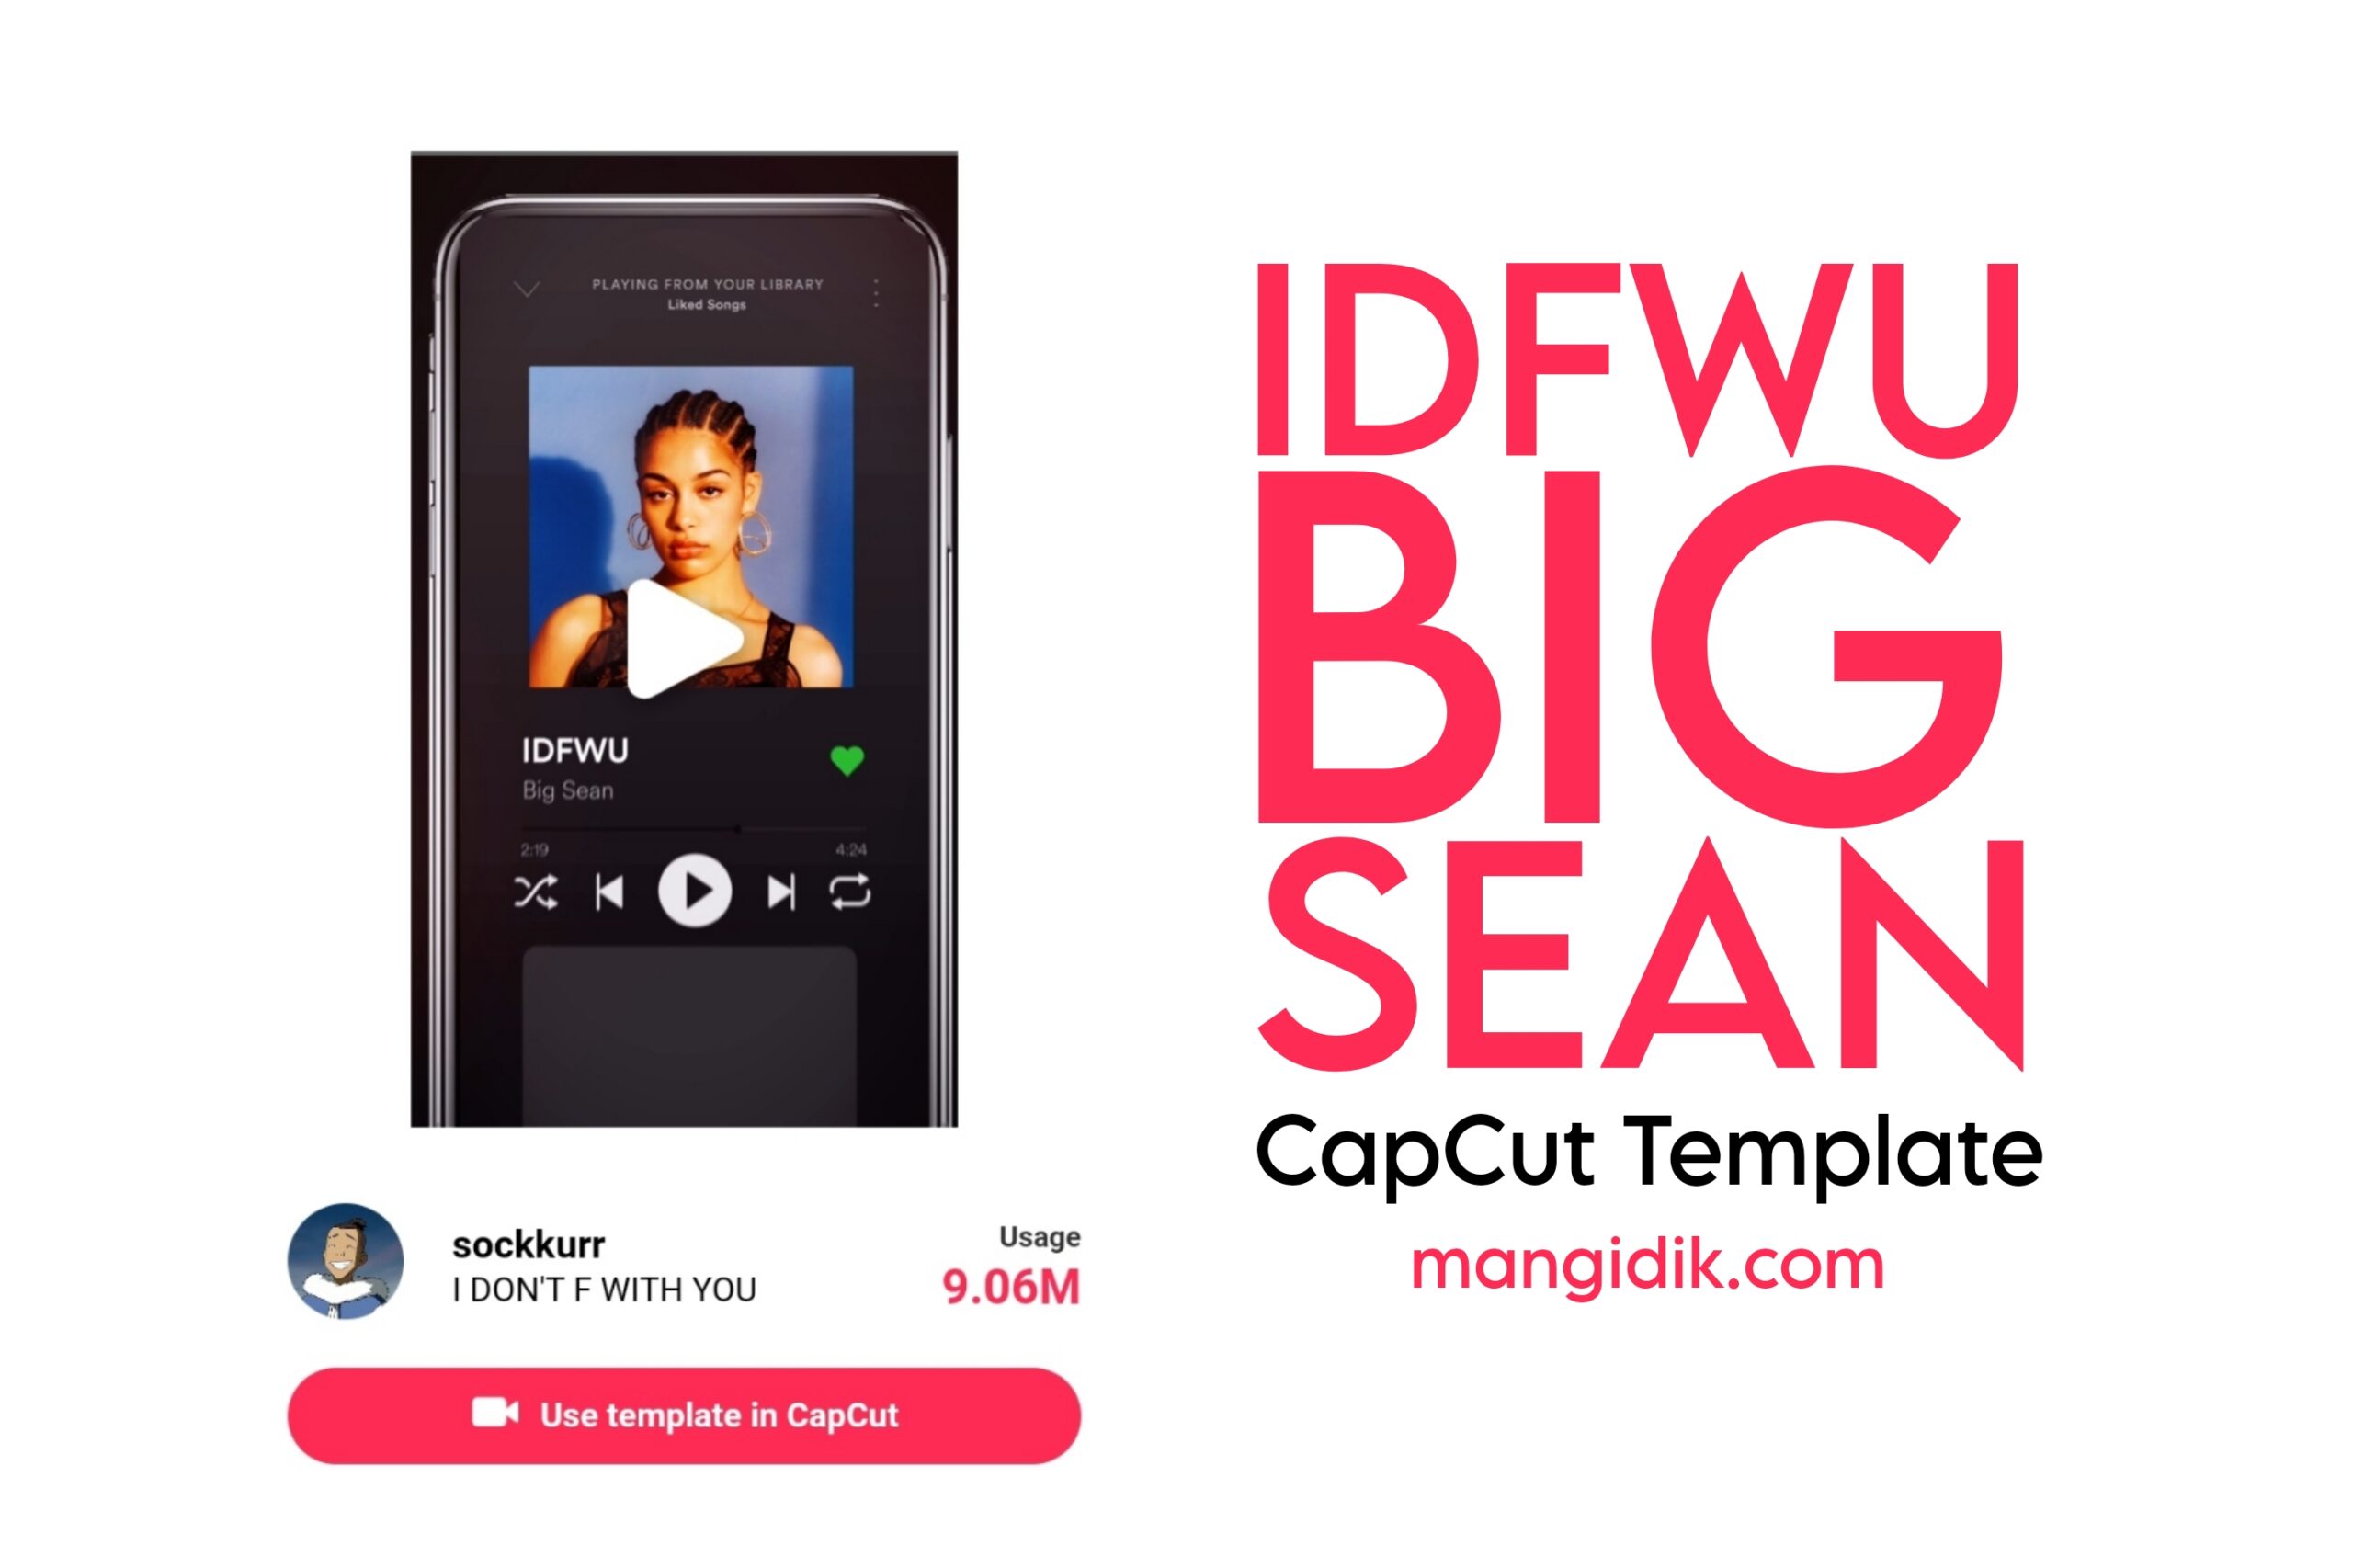 IDFWU CapCut Template Link Free, Song by Big Sean Mang Idik